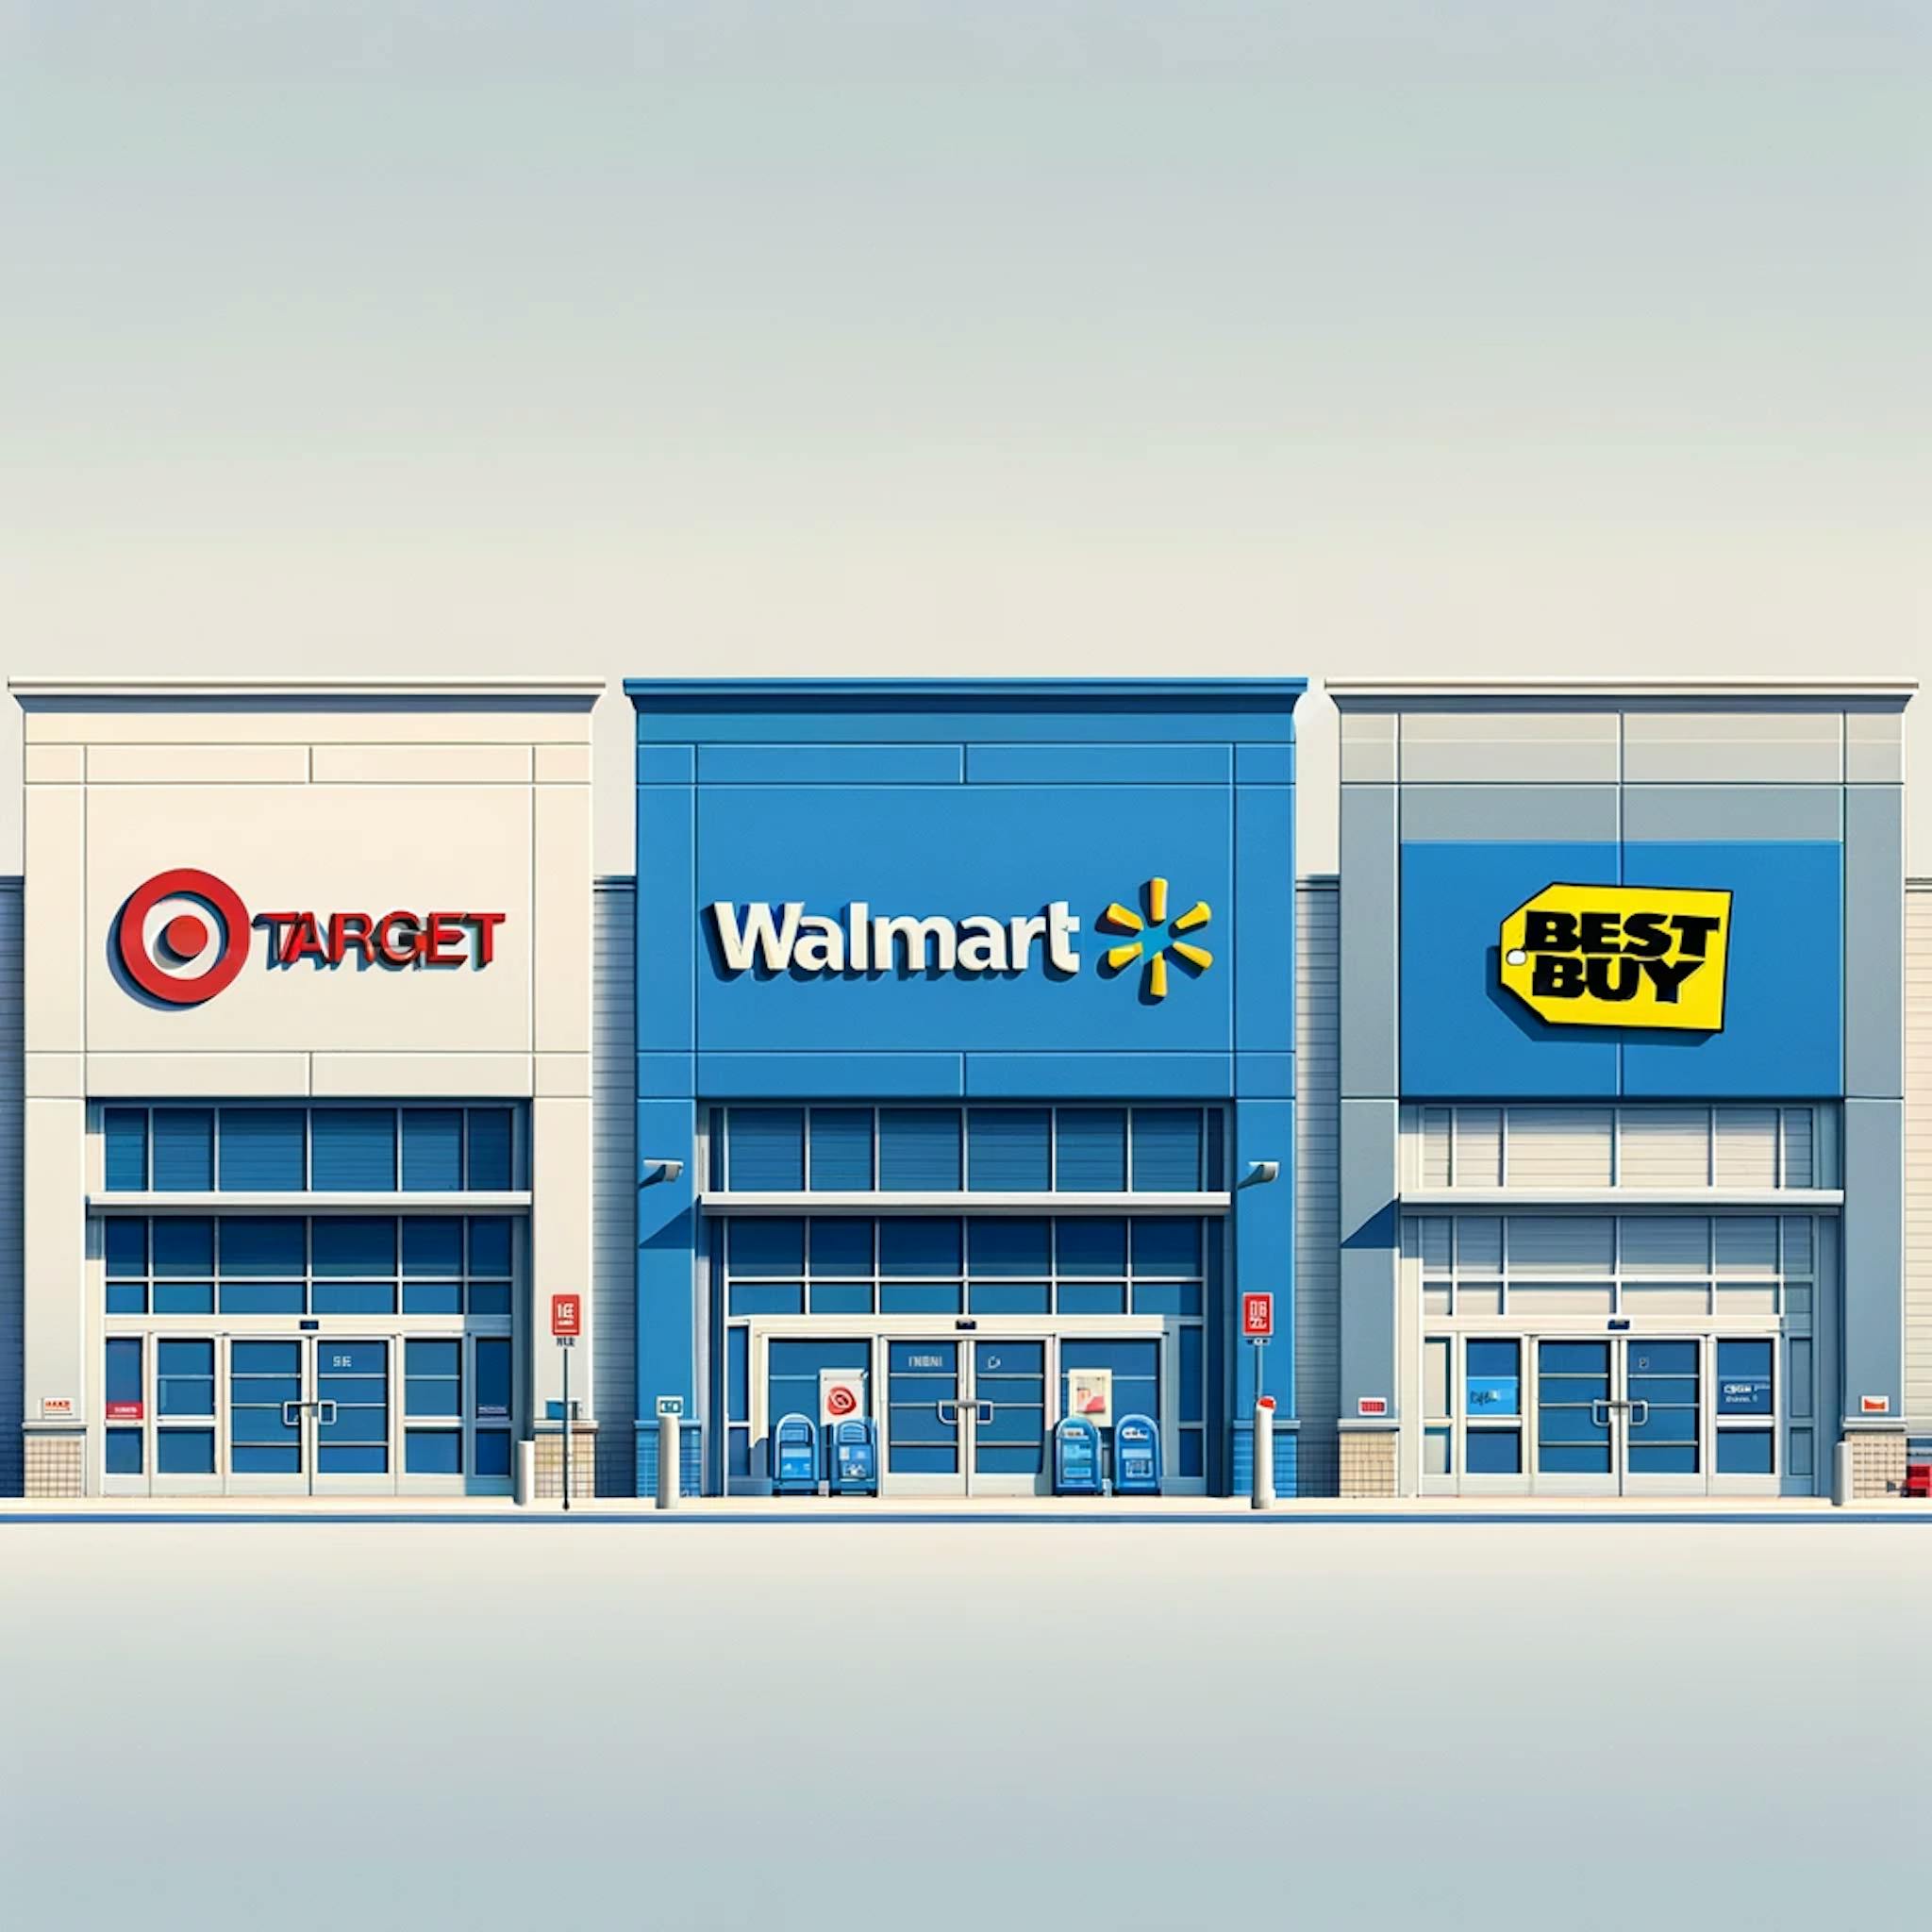 popular retailer stores such as Target, Walmart, and Best Buy